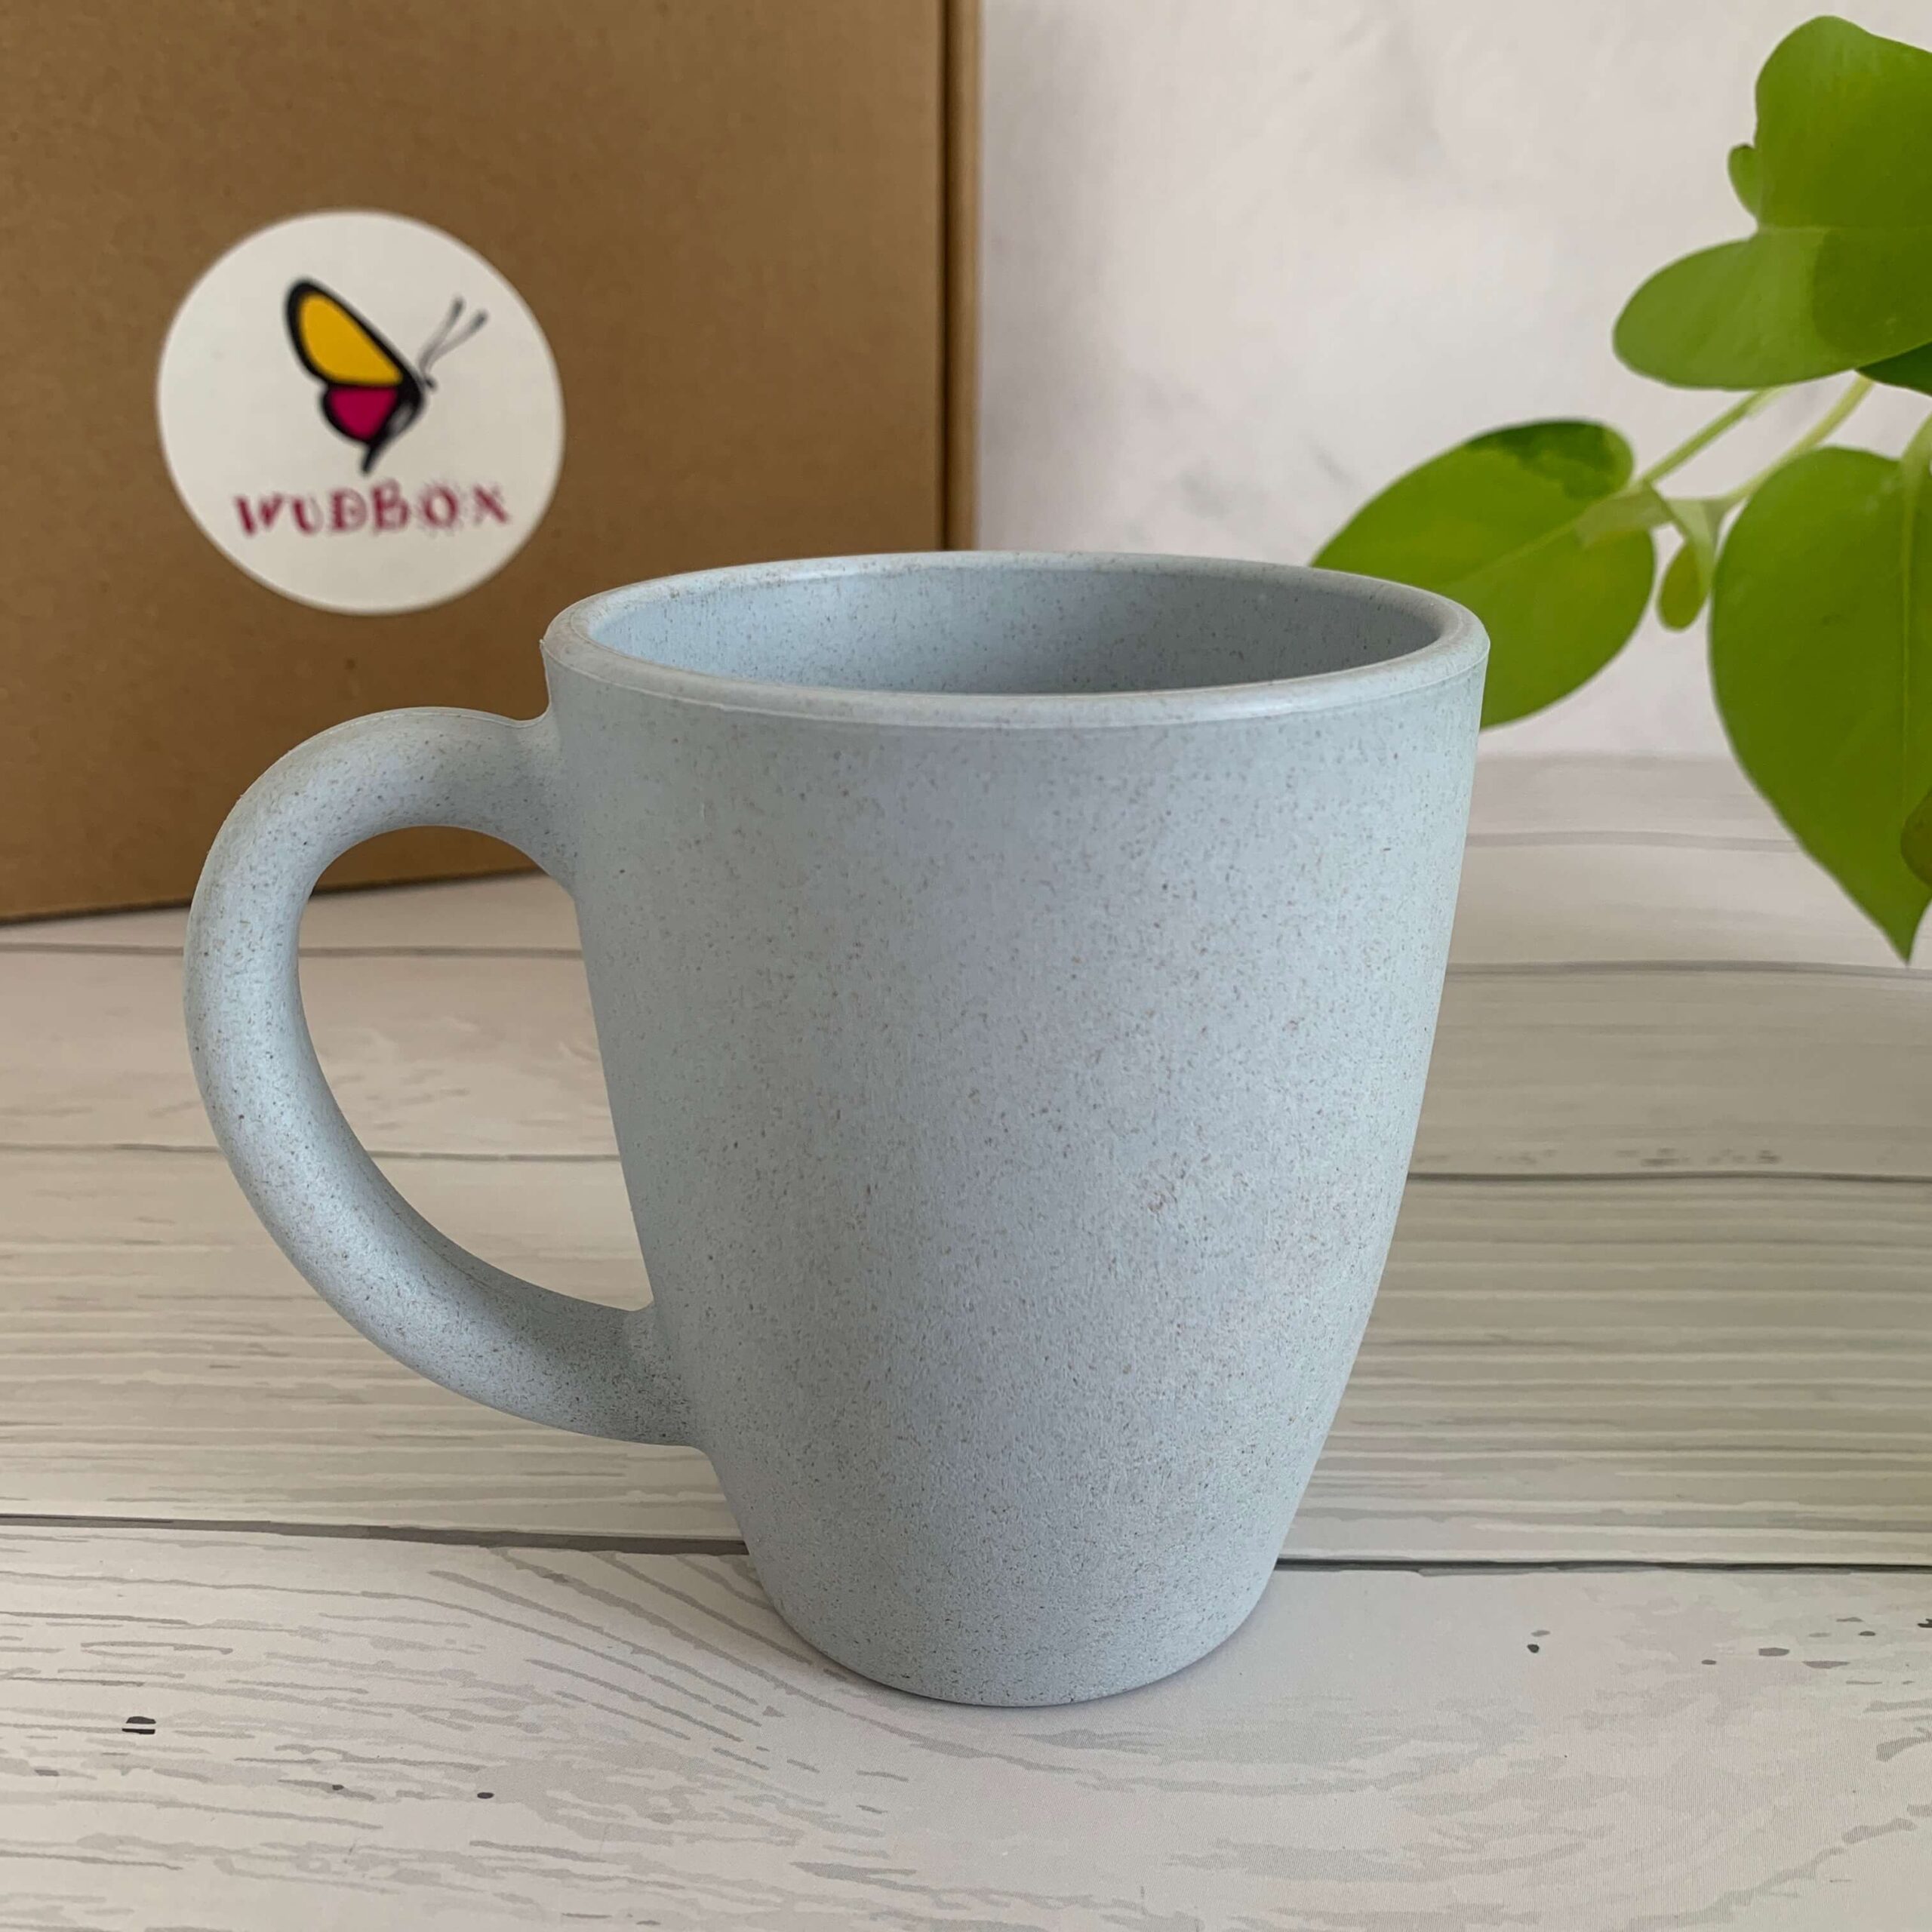 Buy Bulk Eco Friendly Rice Husk Coffee Cups in India - WudBox